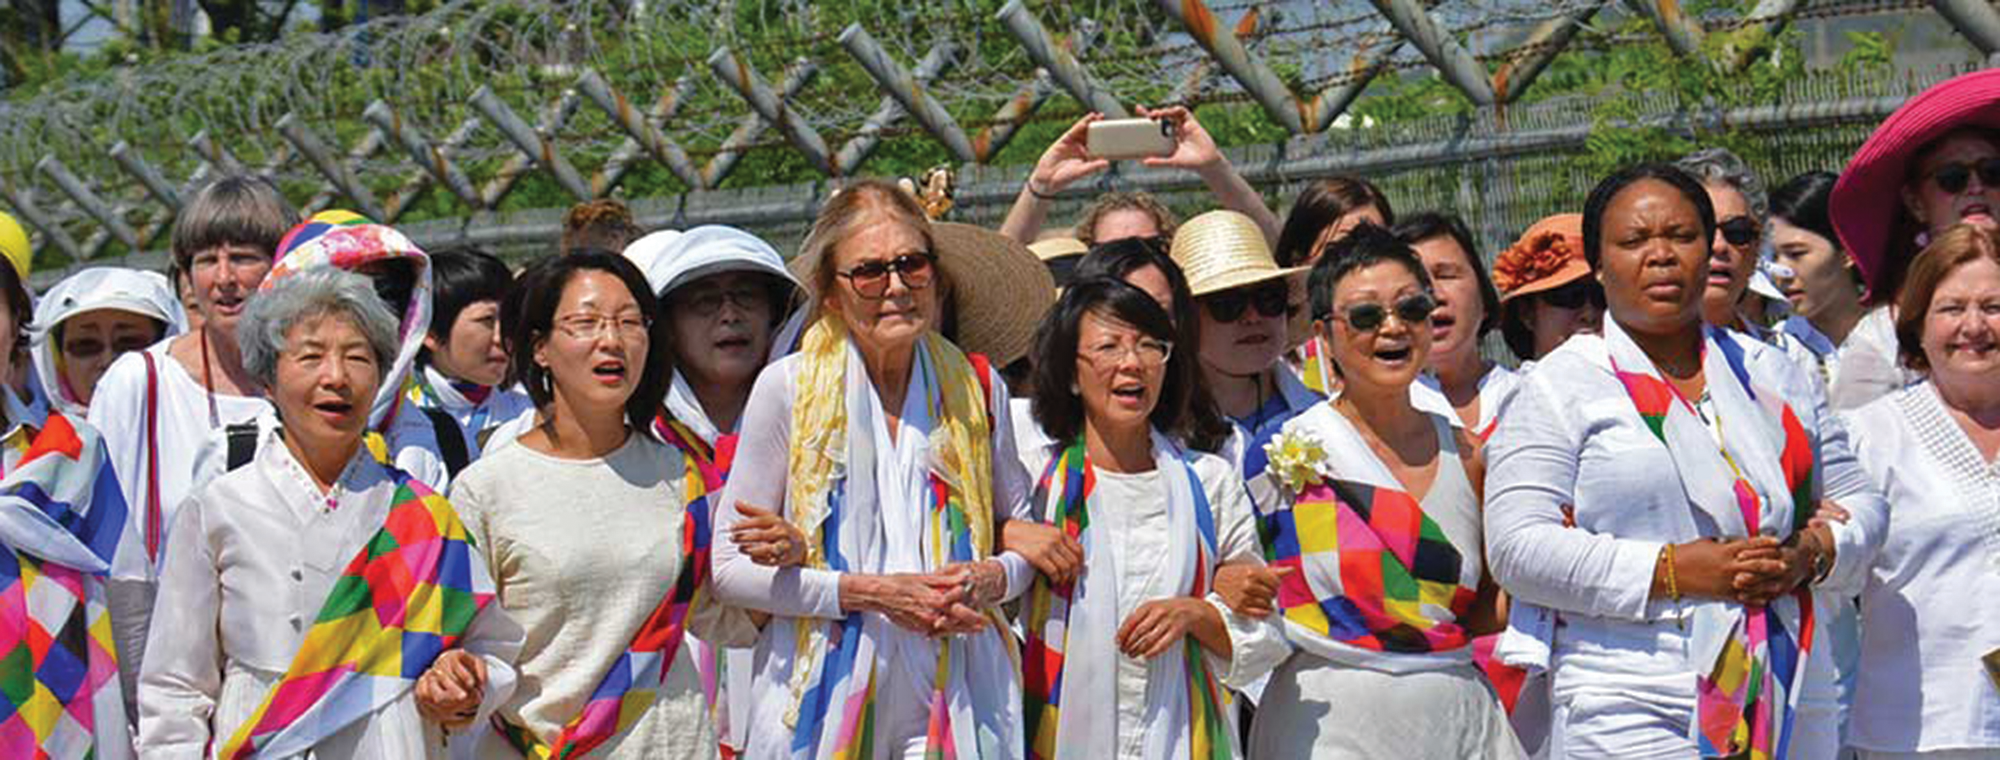 Women crossing the DMZ in 2015, South Korea. Image: Women Cross DMZ